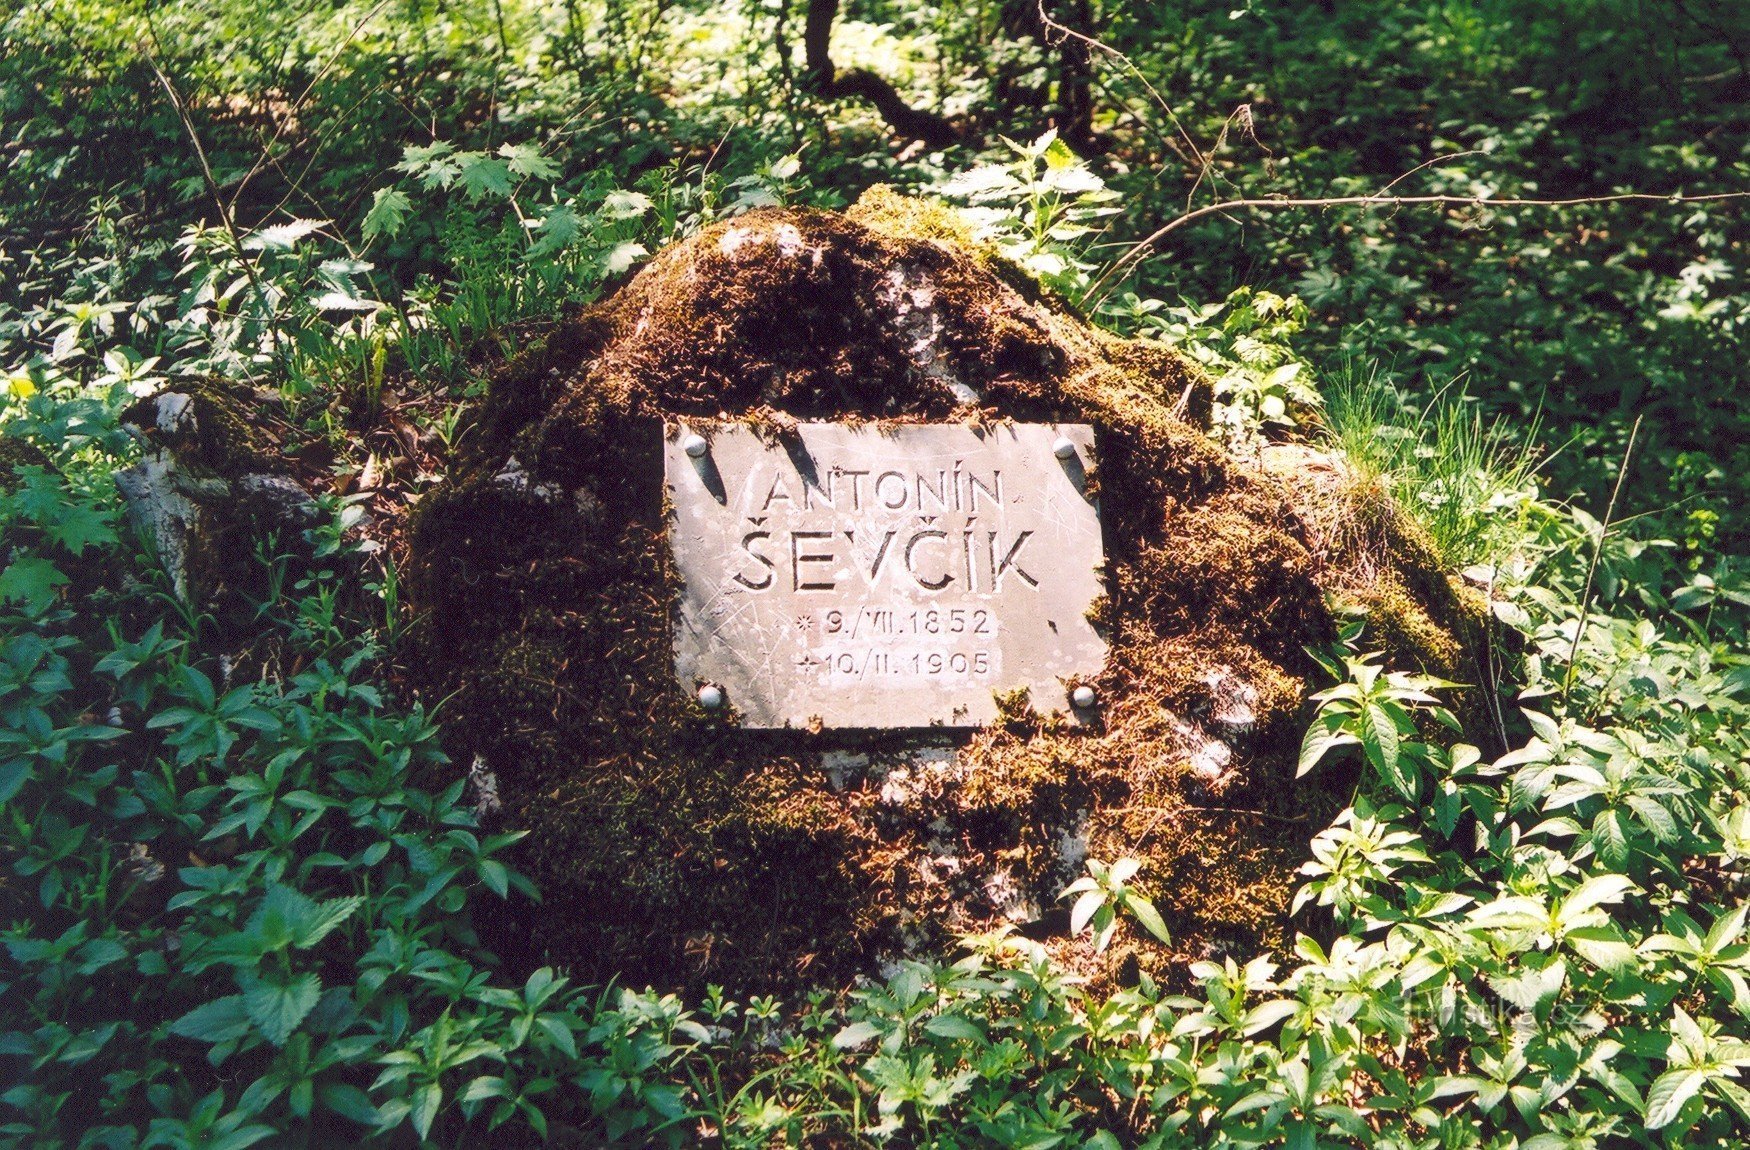 Ševčík's monument